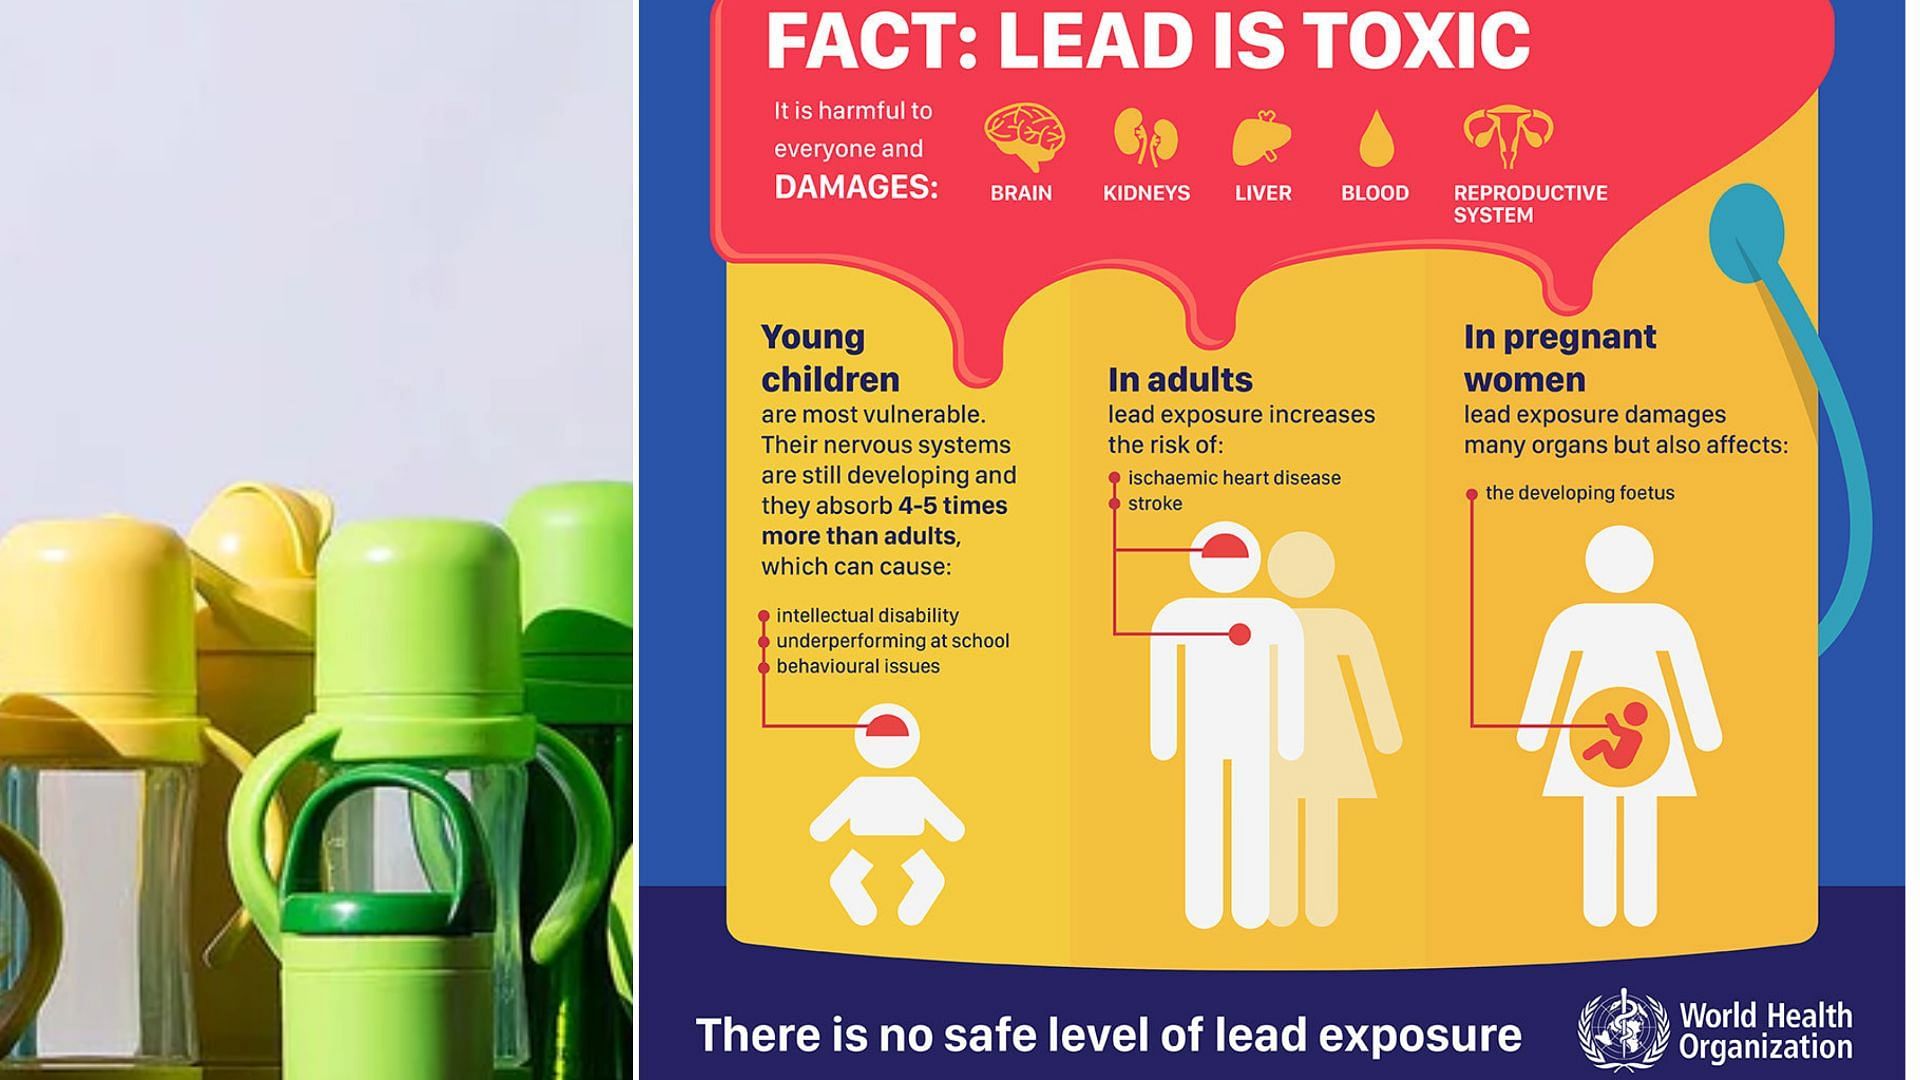 lead is toxic Infographic (Image via World Health Organization)